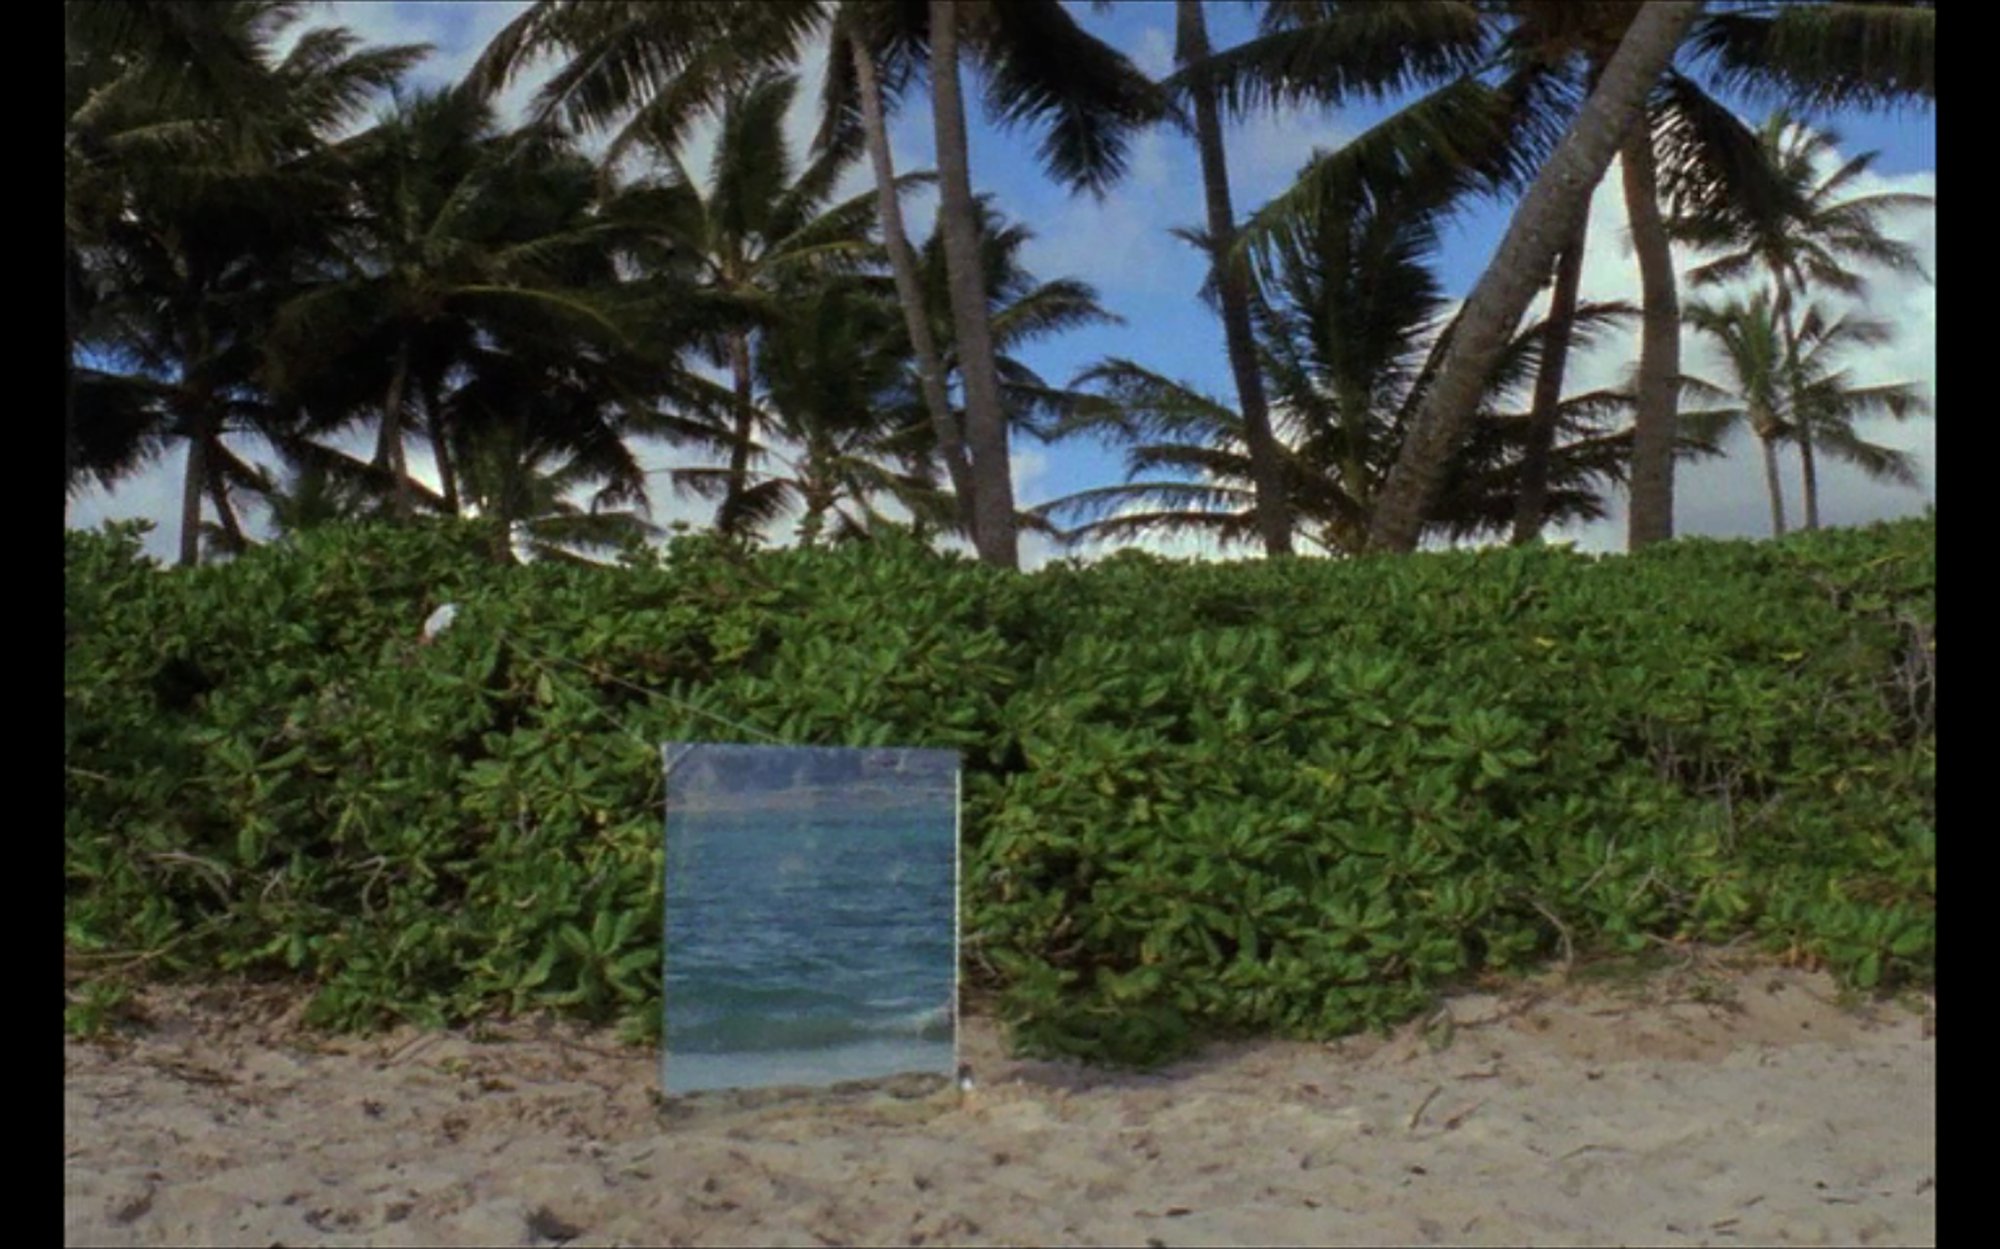 Tamara Henderson, Accent Grave on Ananas, still, 16 mm film, colour and sound by Dan Riley, 2 min. 44 sec., 2013